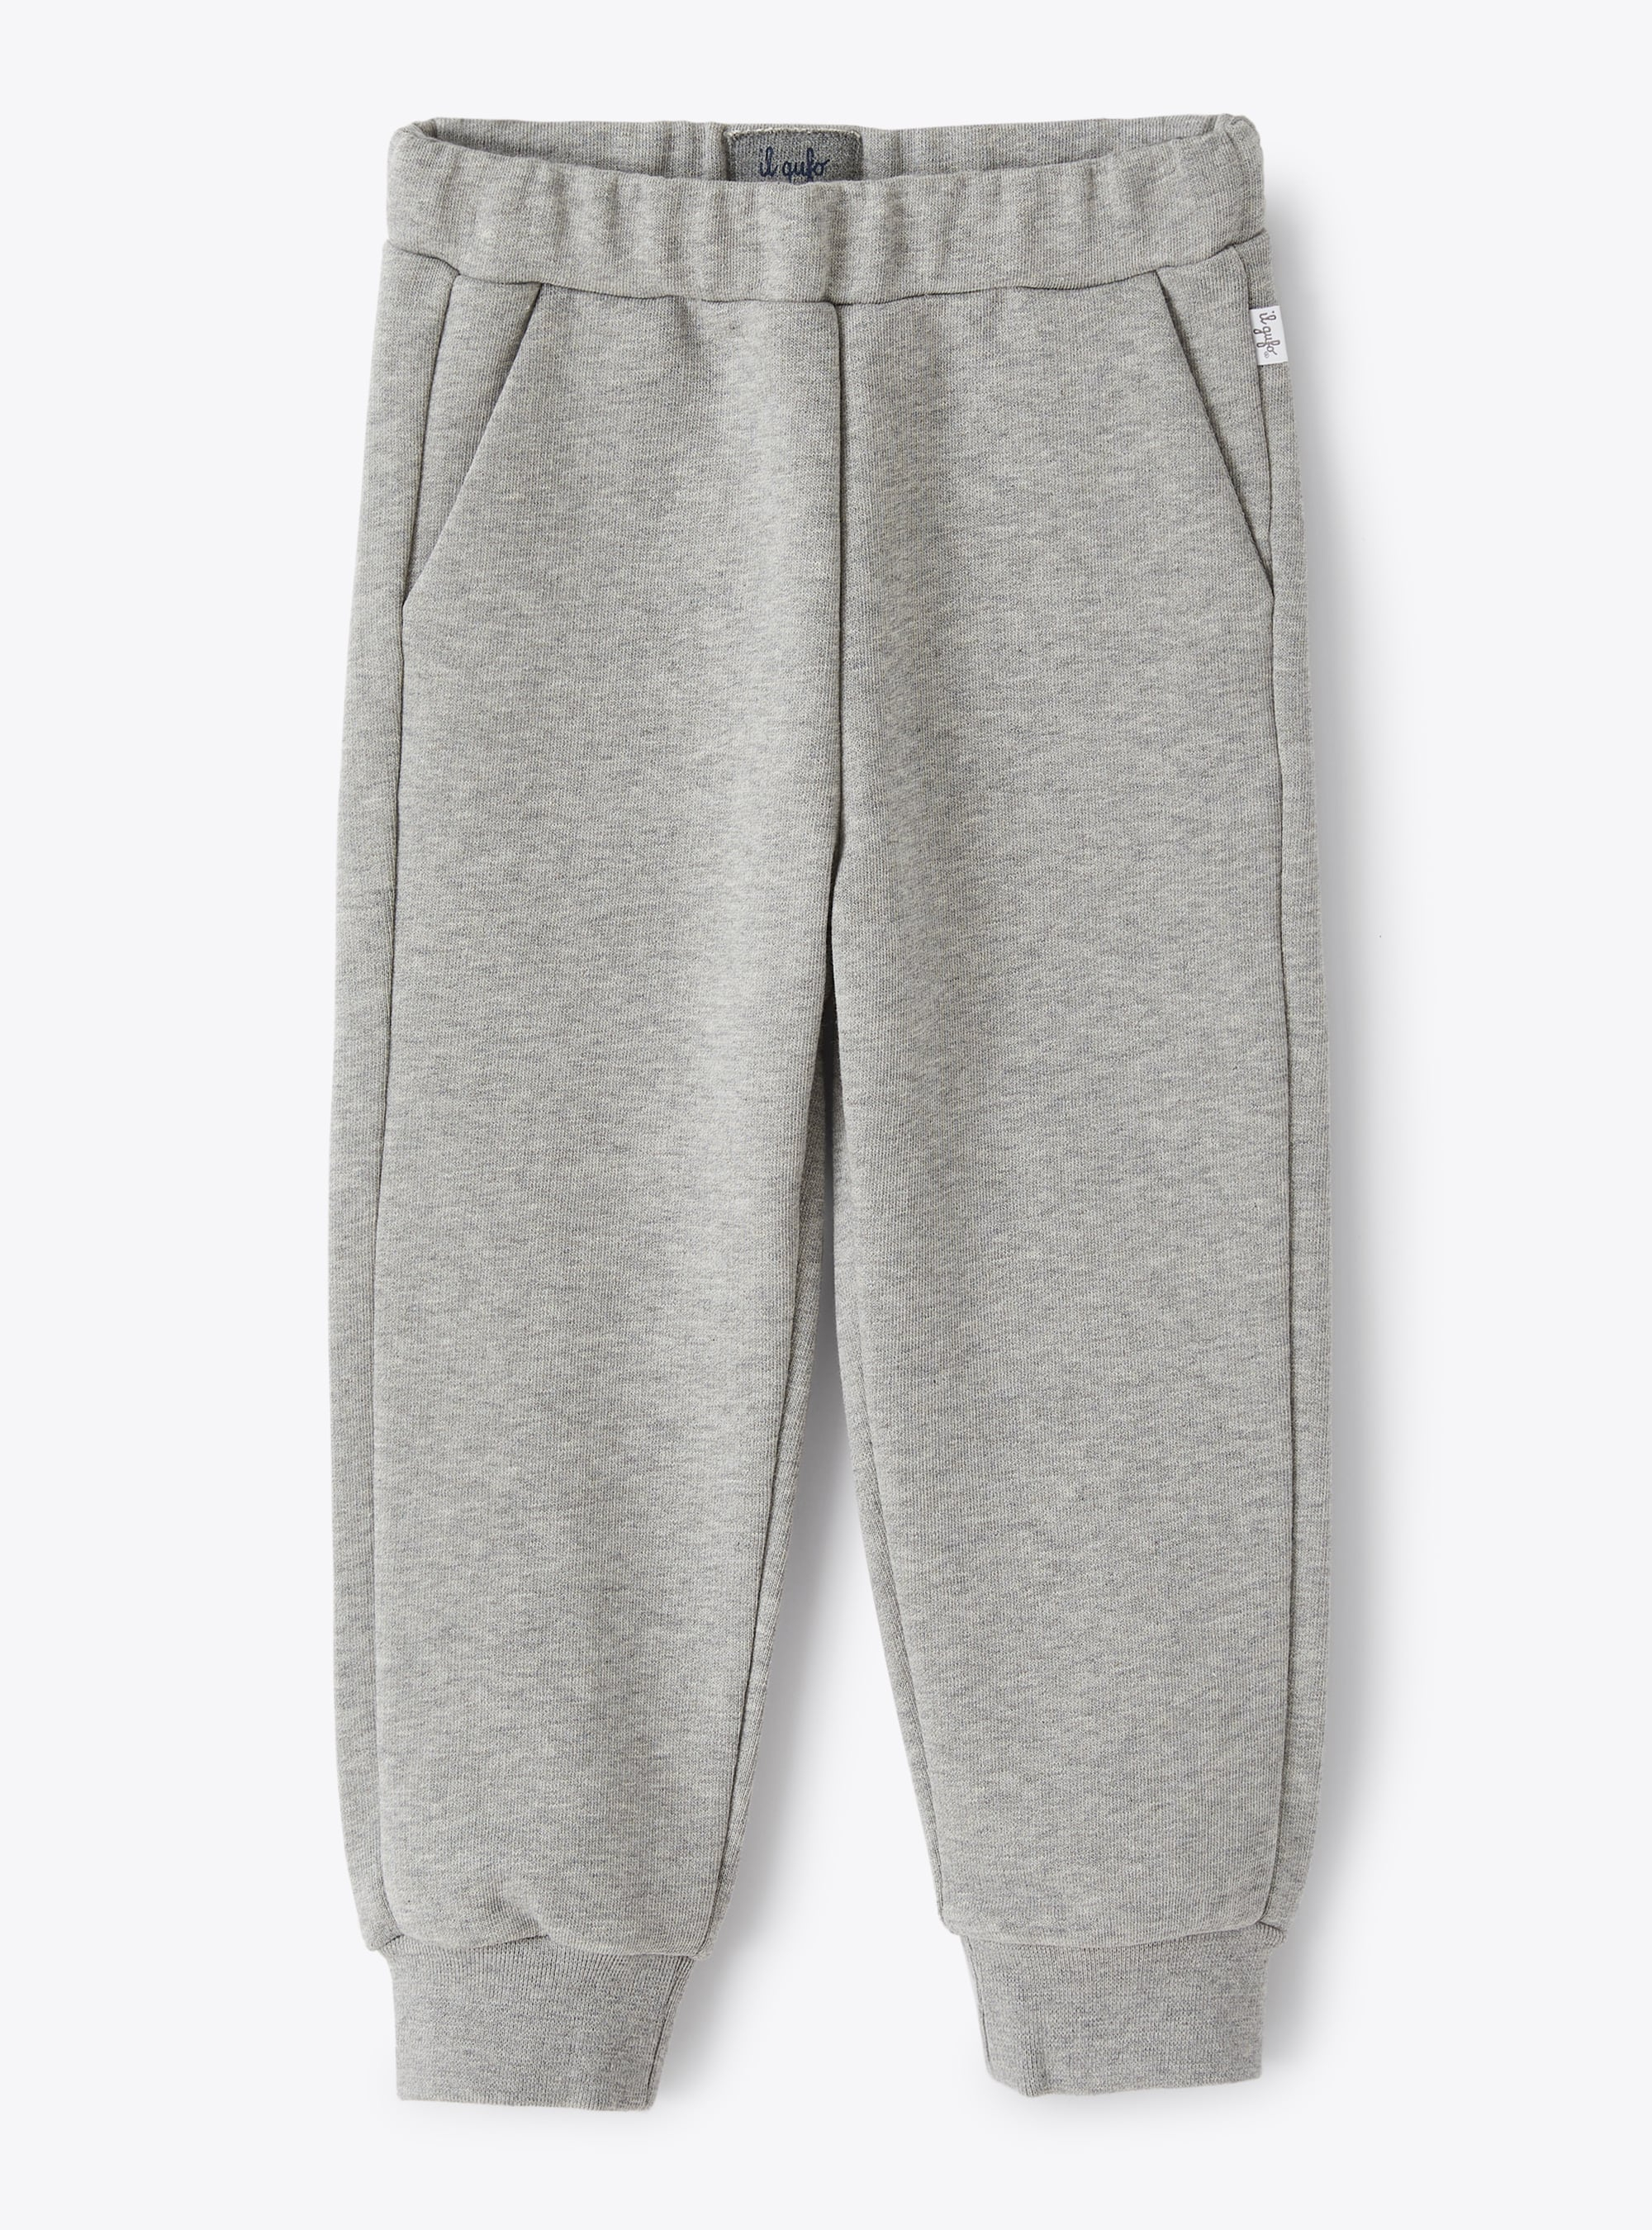 Grey cotton fleece joggers - Trousers - Il Gufo